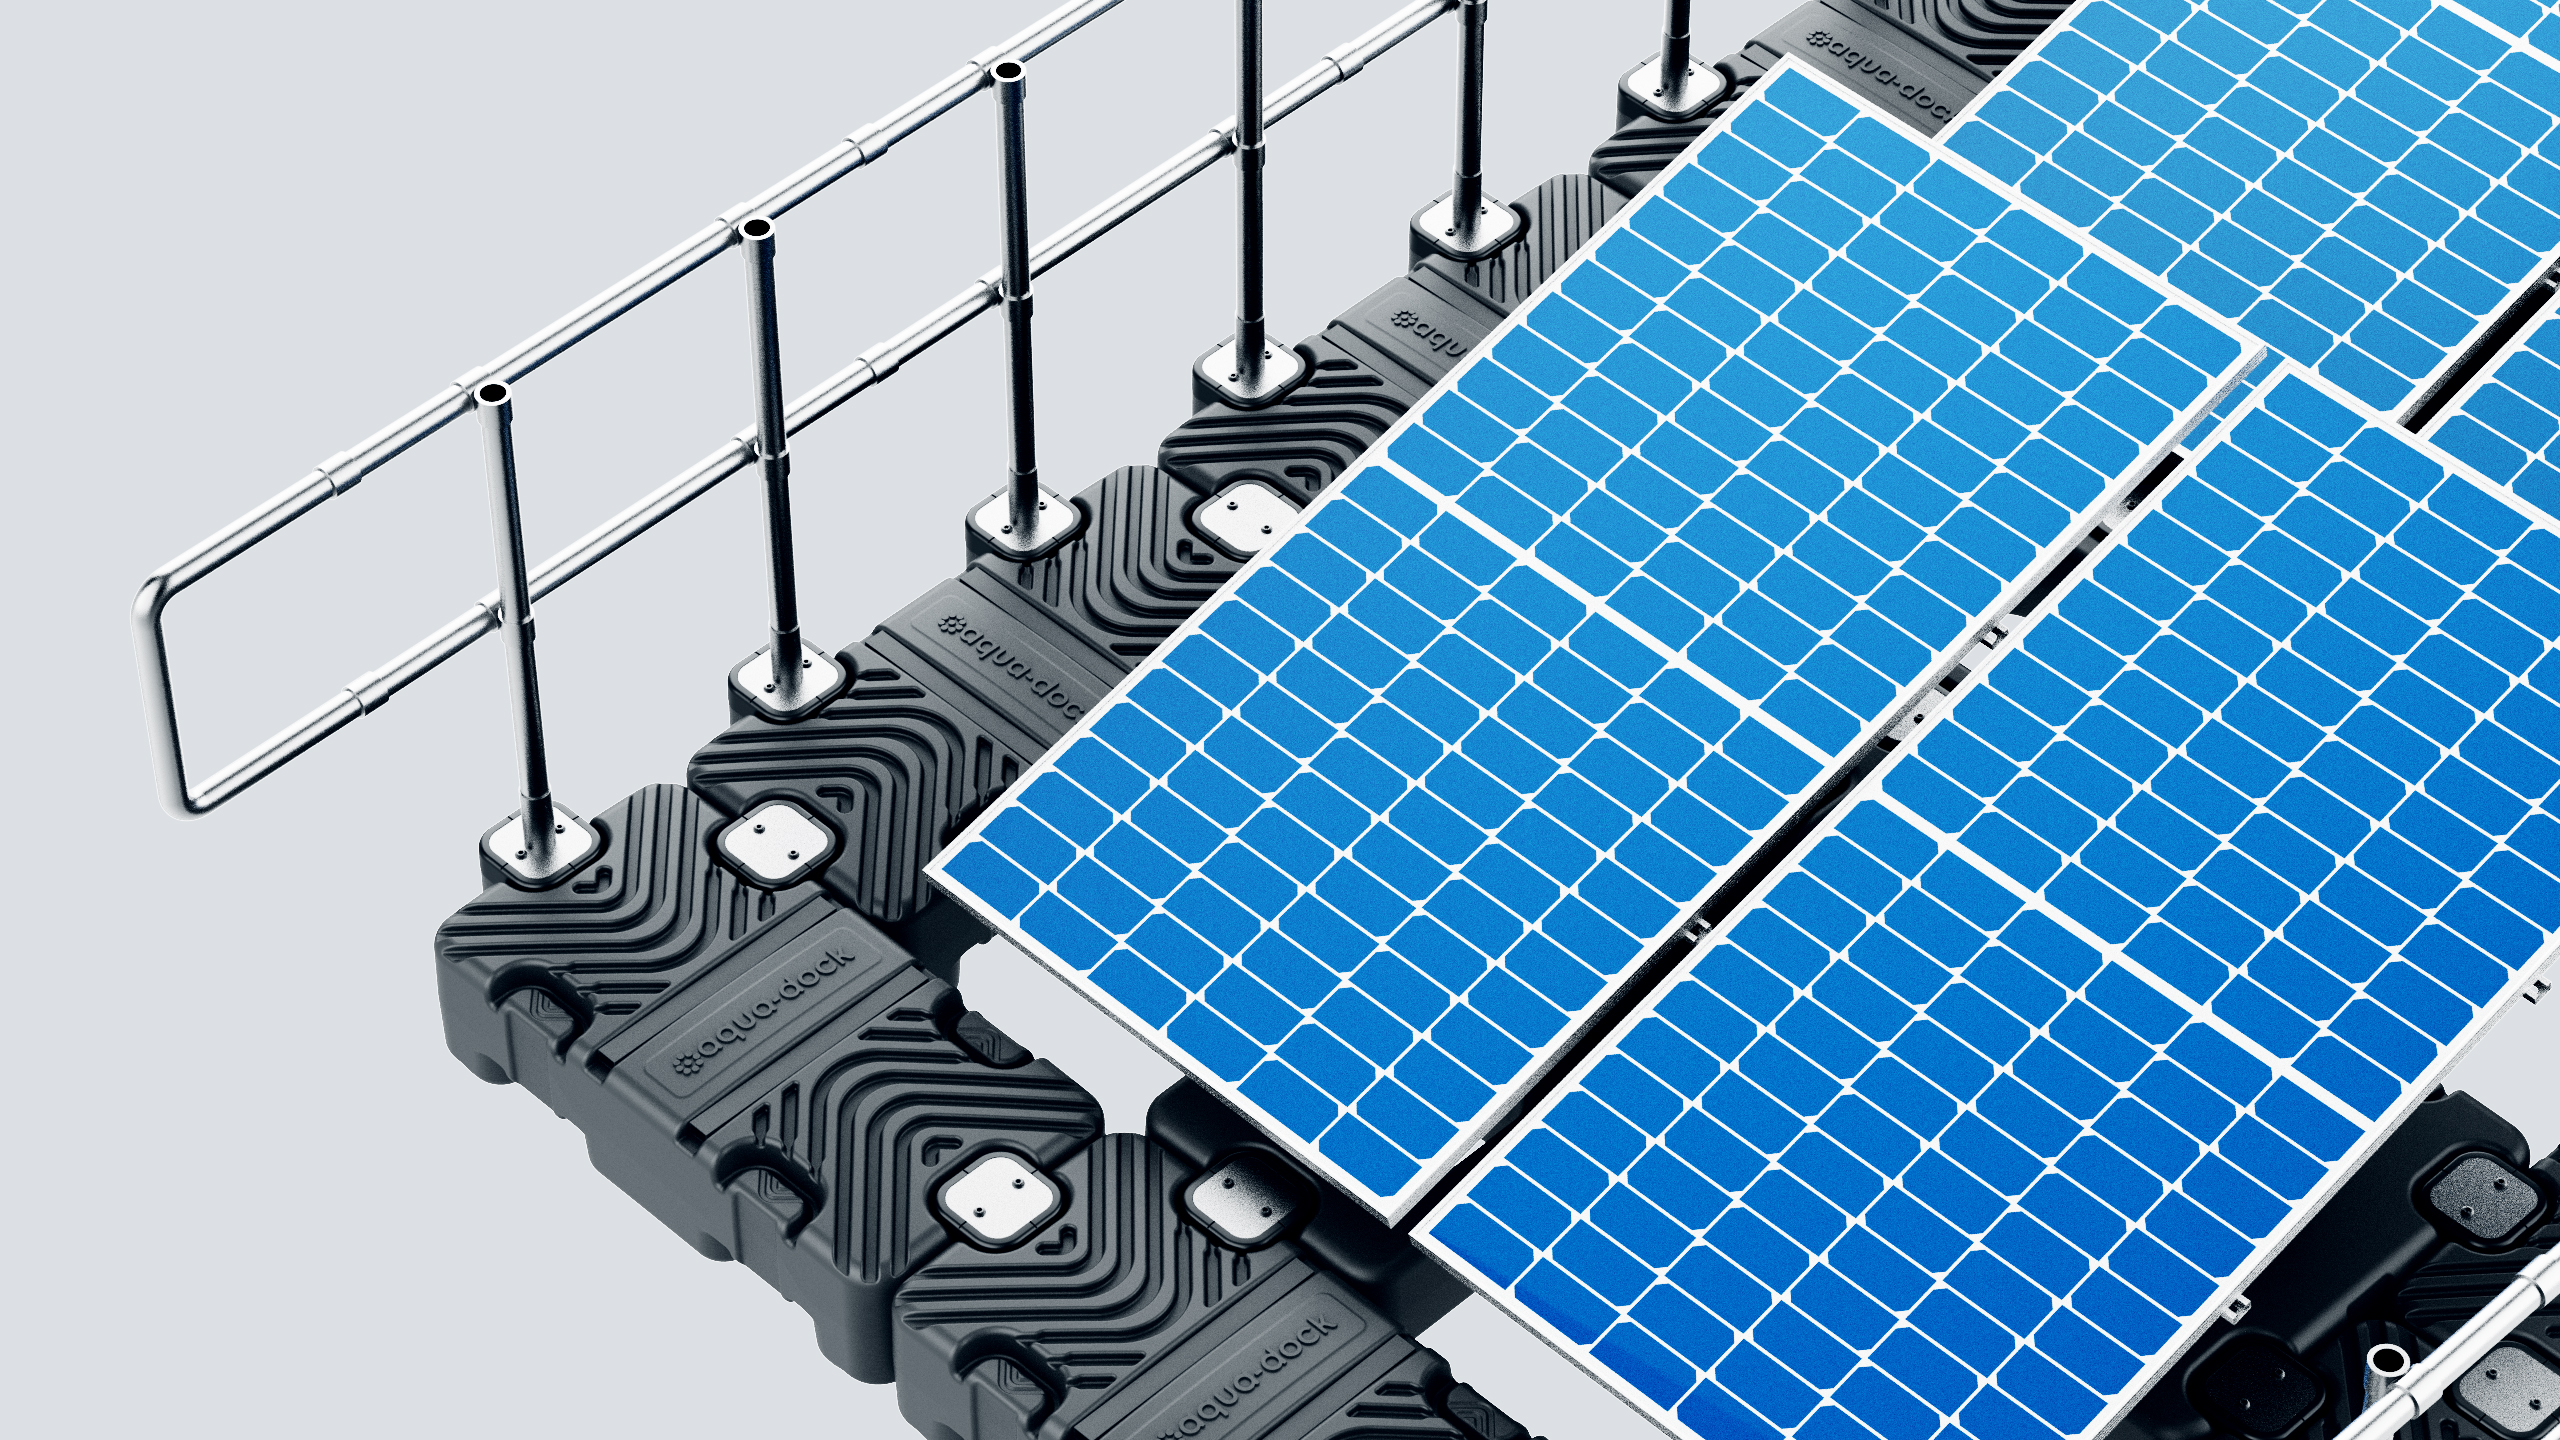 Aqua-Dock Floating Solar Panel System